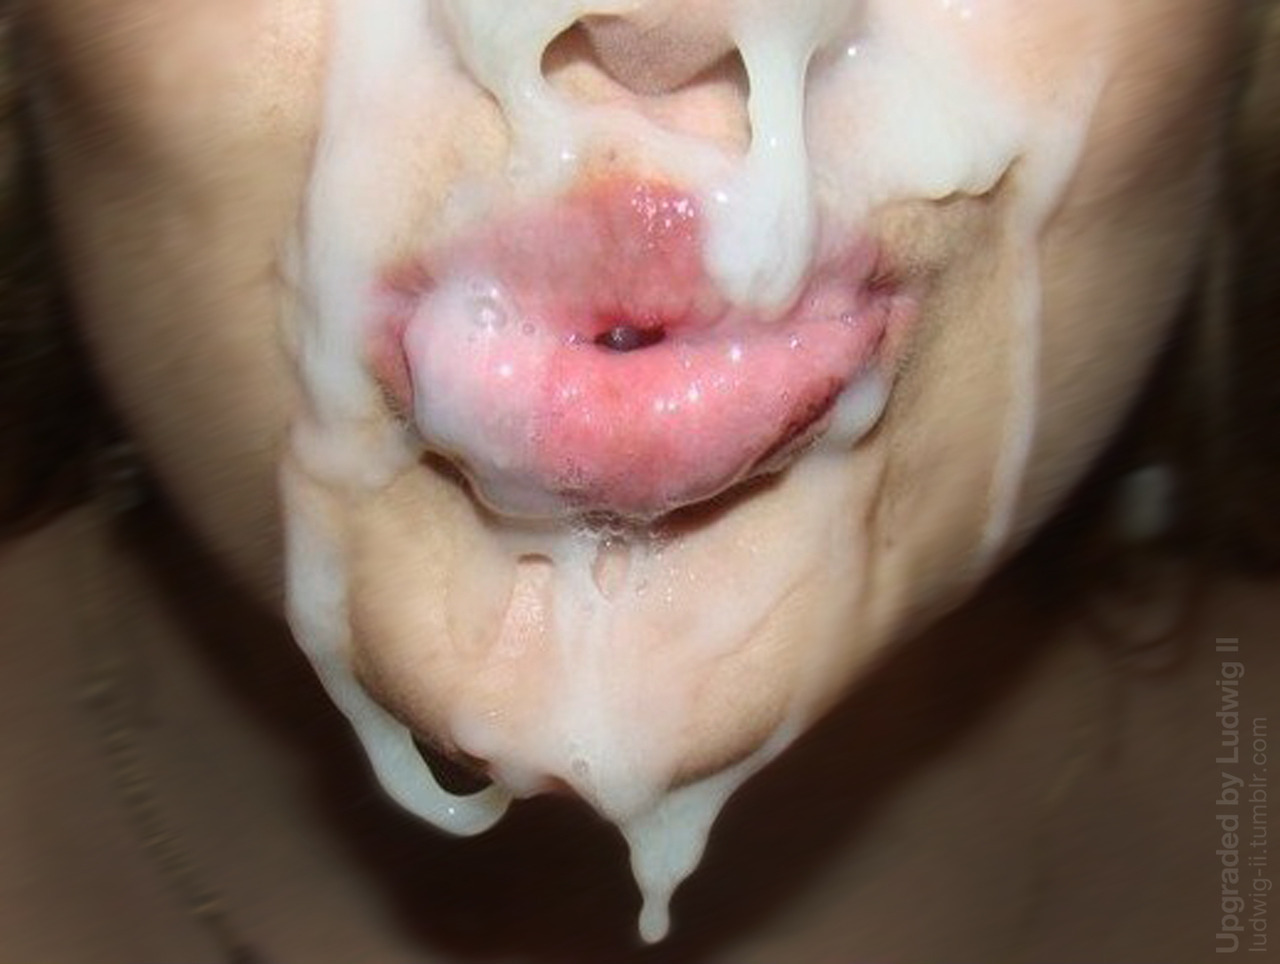 strapon tryout part eporner free porn tube #addolikesmemo  #animated  #anoxfavcum  #closeup  #cum  #cuminmouth  #cumplay  #cumshot  #cumshotgif  #cumslut  #dripping  #facial  #fapfiles  #gif  #gross  #mmm  #semen  #sperm  #tongue